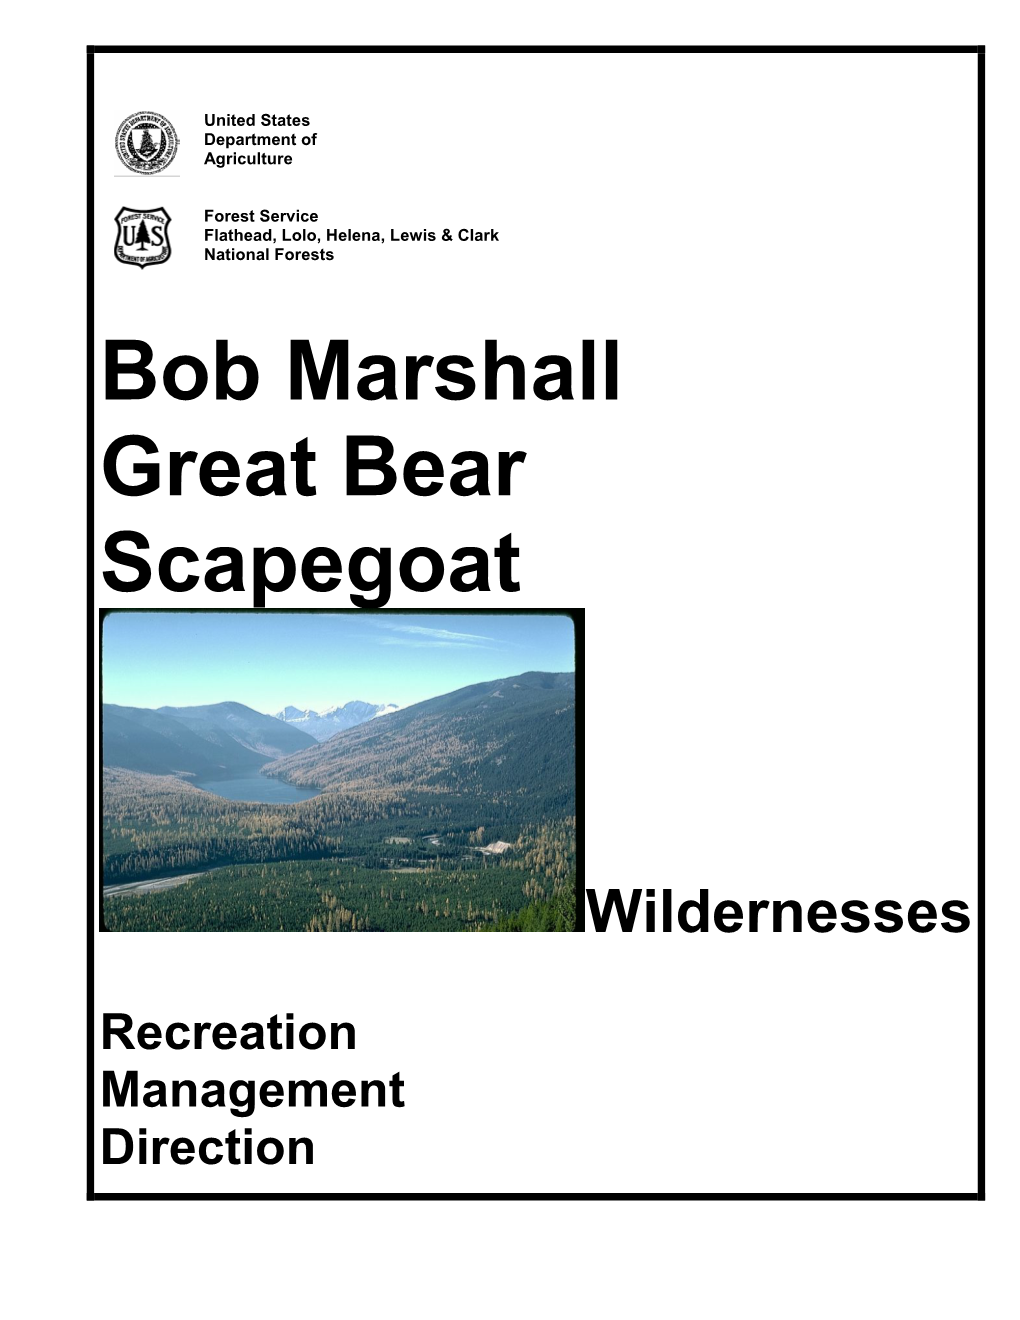 Bob Marshall Wilderness Complex Recreation Management Direction